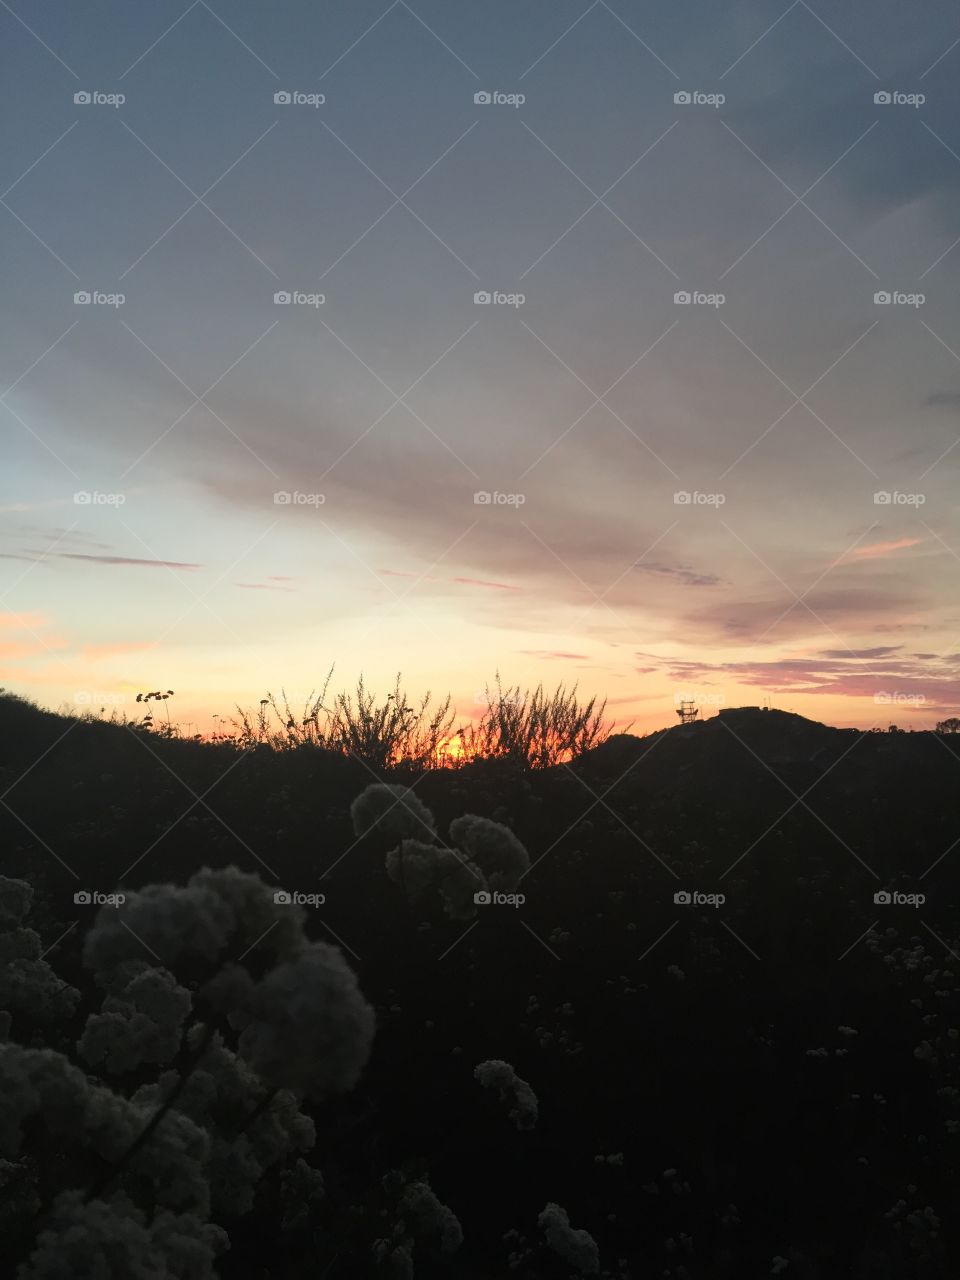 No Person, Landscape, Sunset, Sky, Dawn